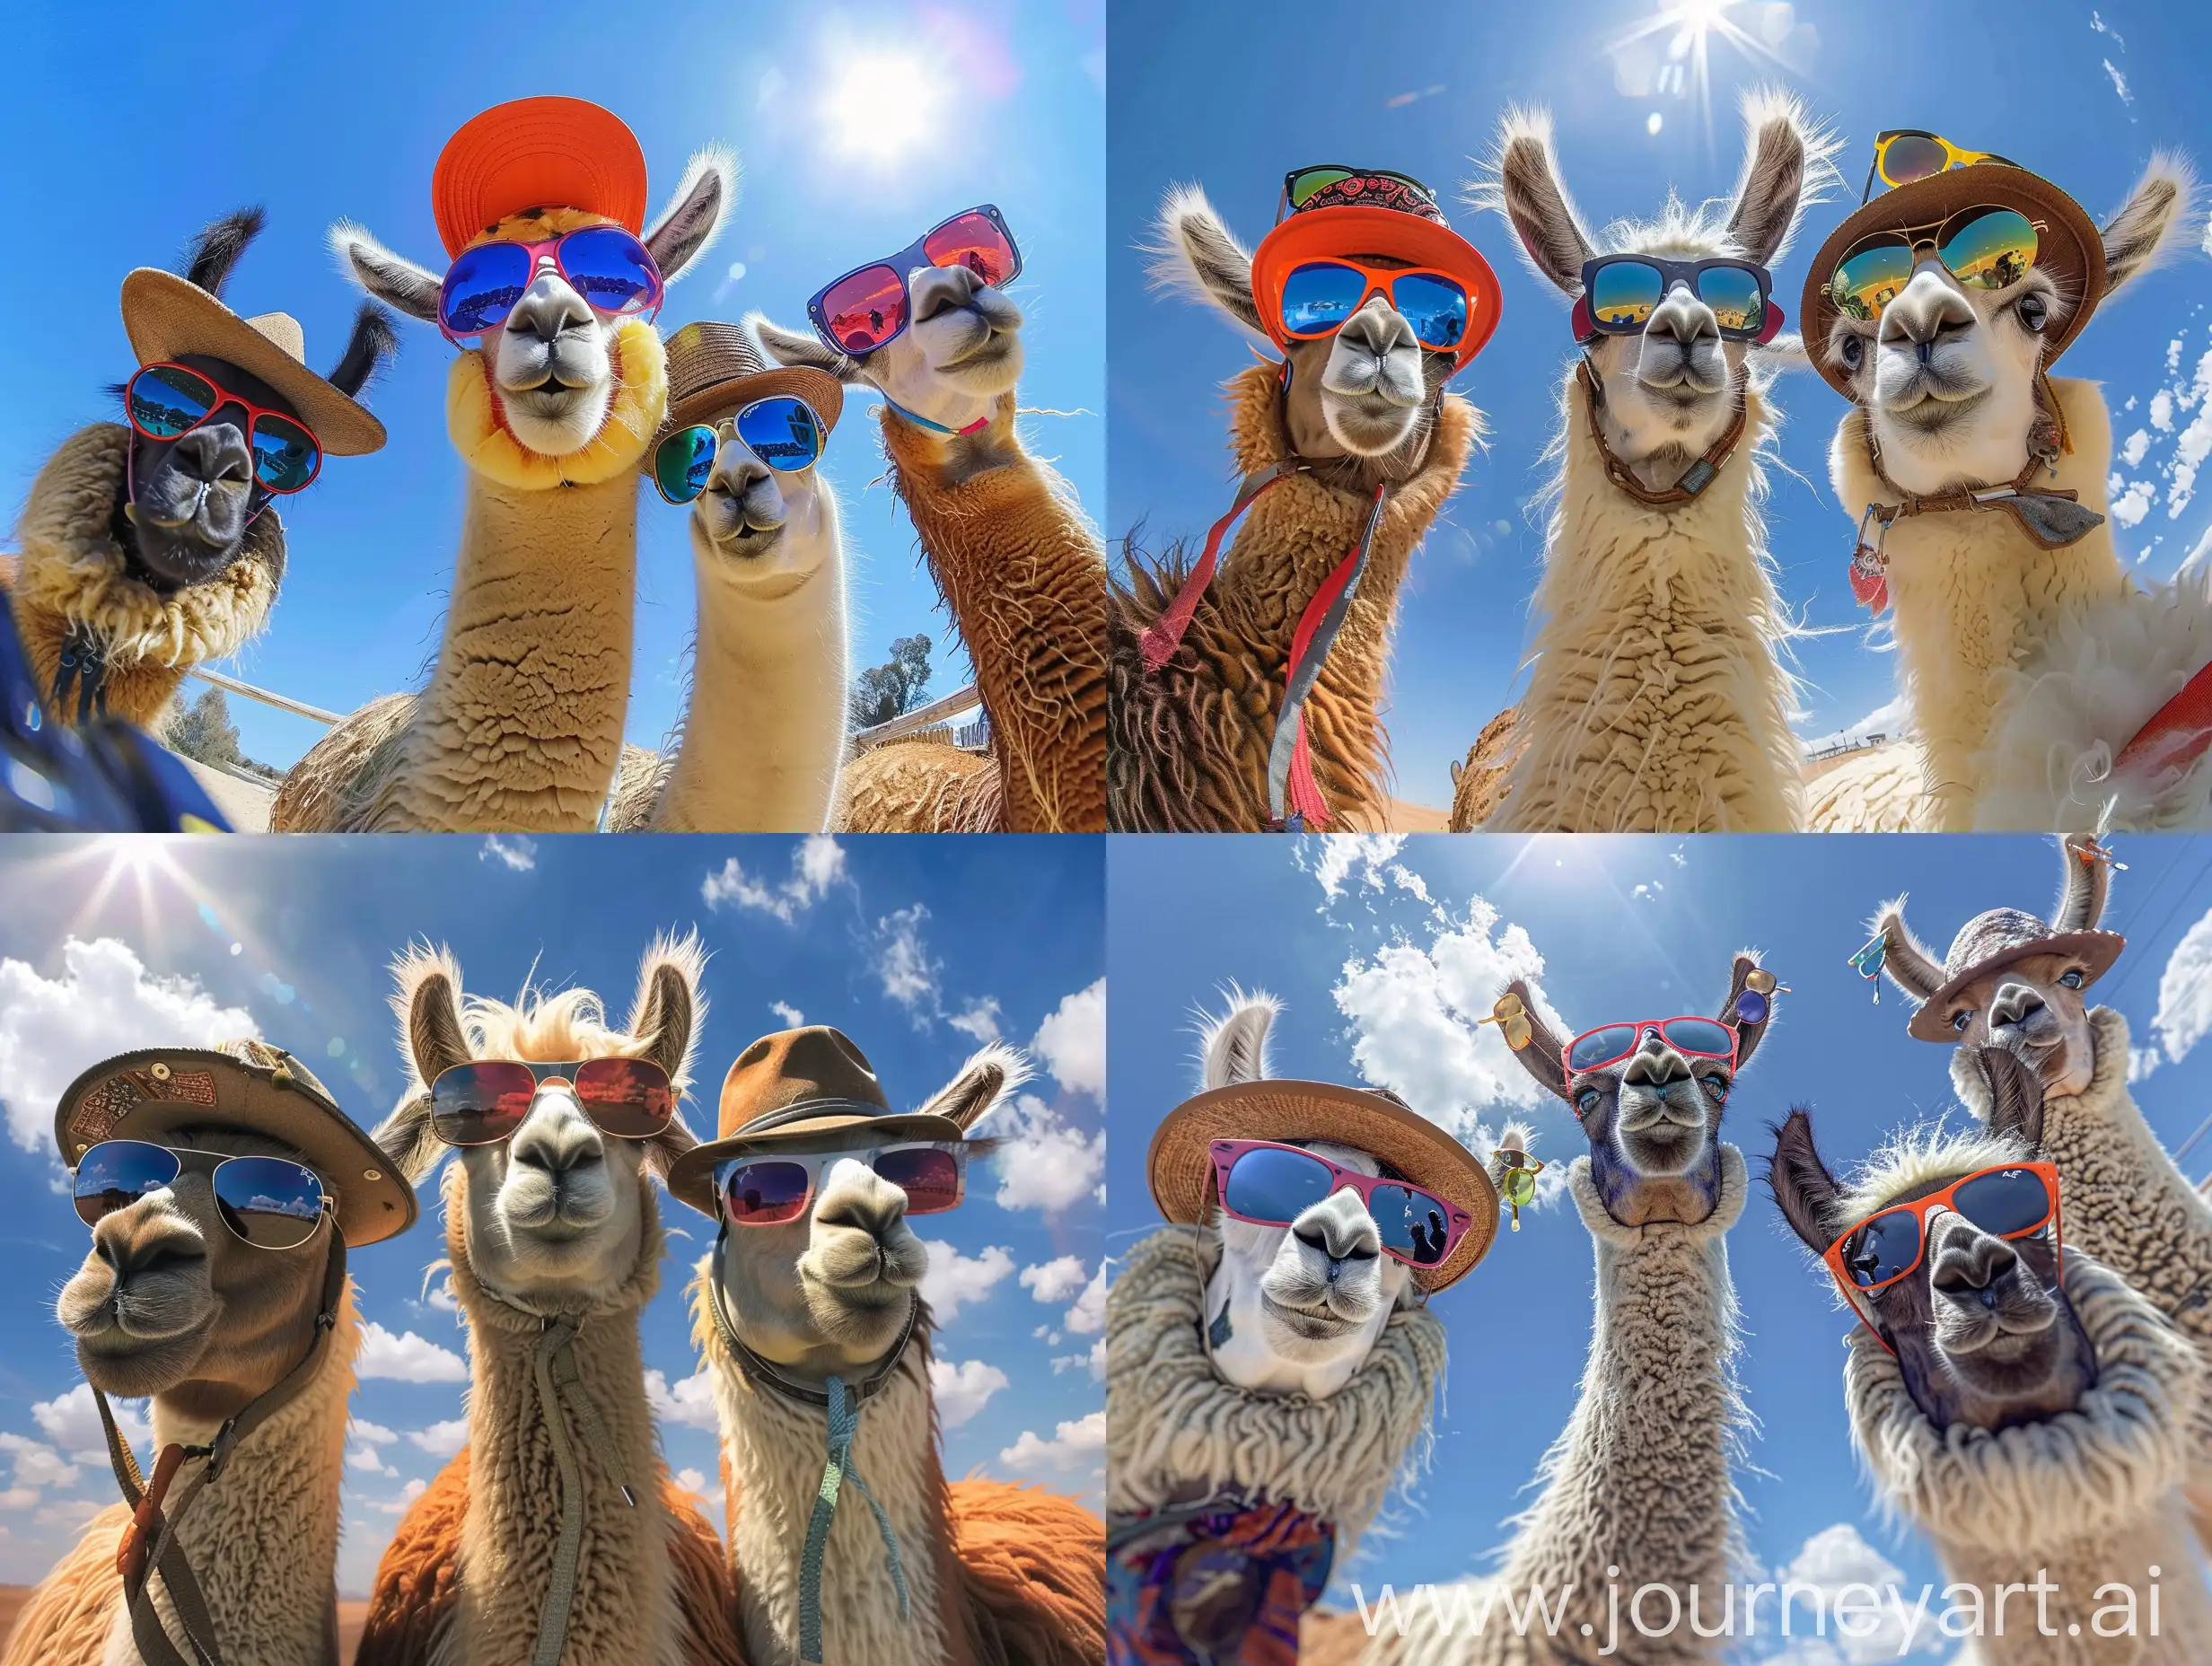 Amusing-Selfie-Three-Llamas-in-Hats-and-Sunglasses-Against-Blue-Sky